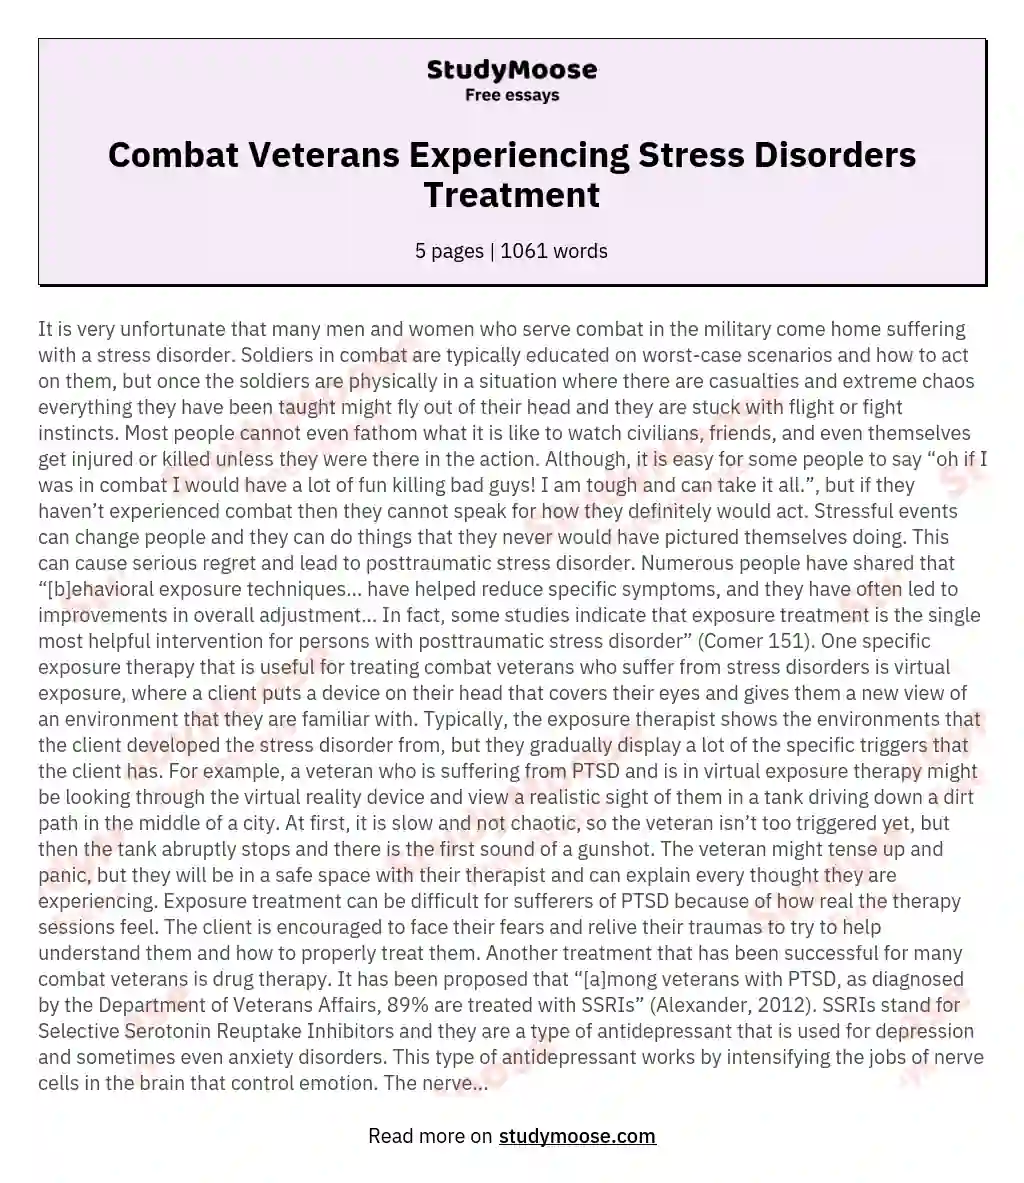 Combat Veterans Experiencing Stress Disorders Treatment essay